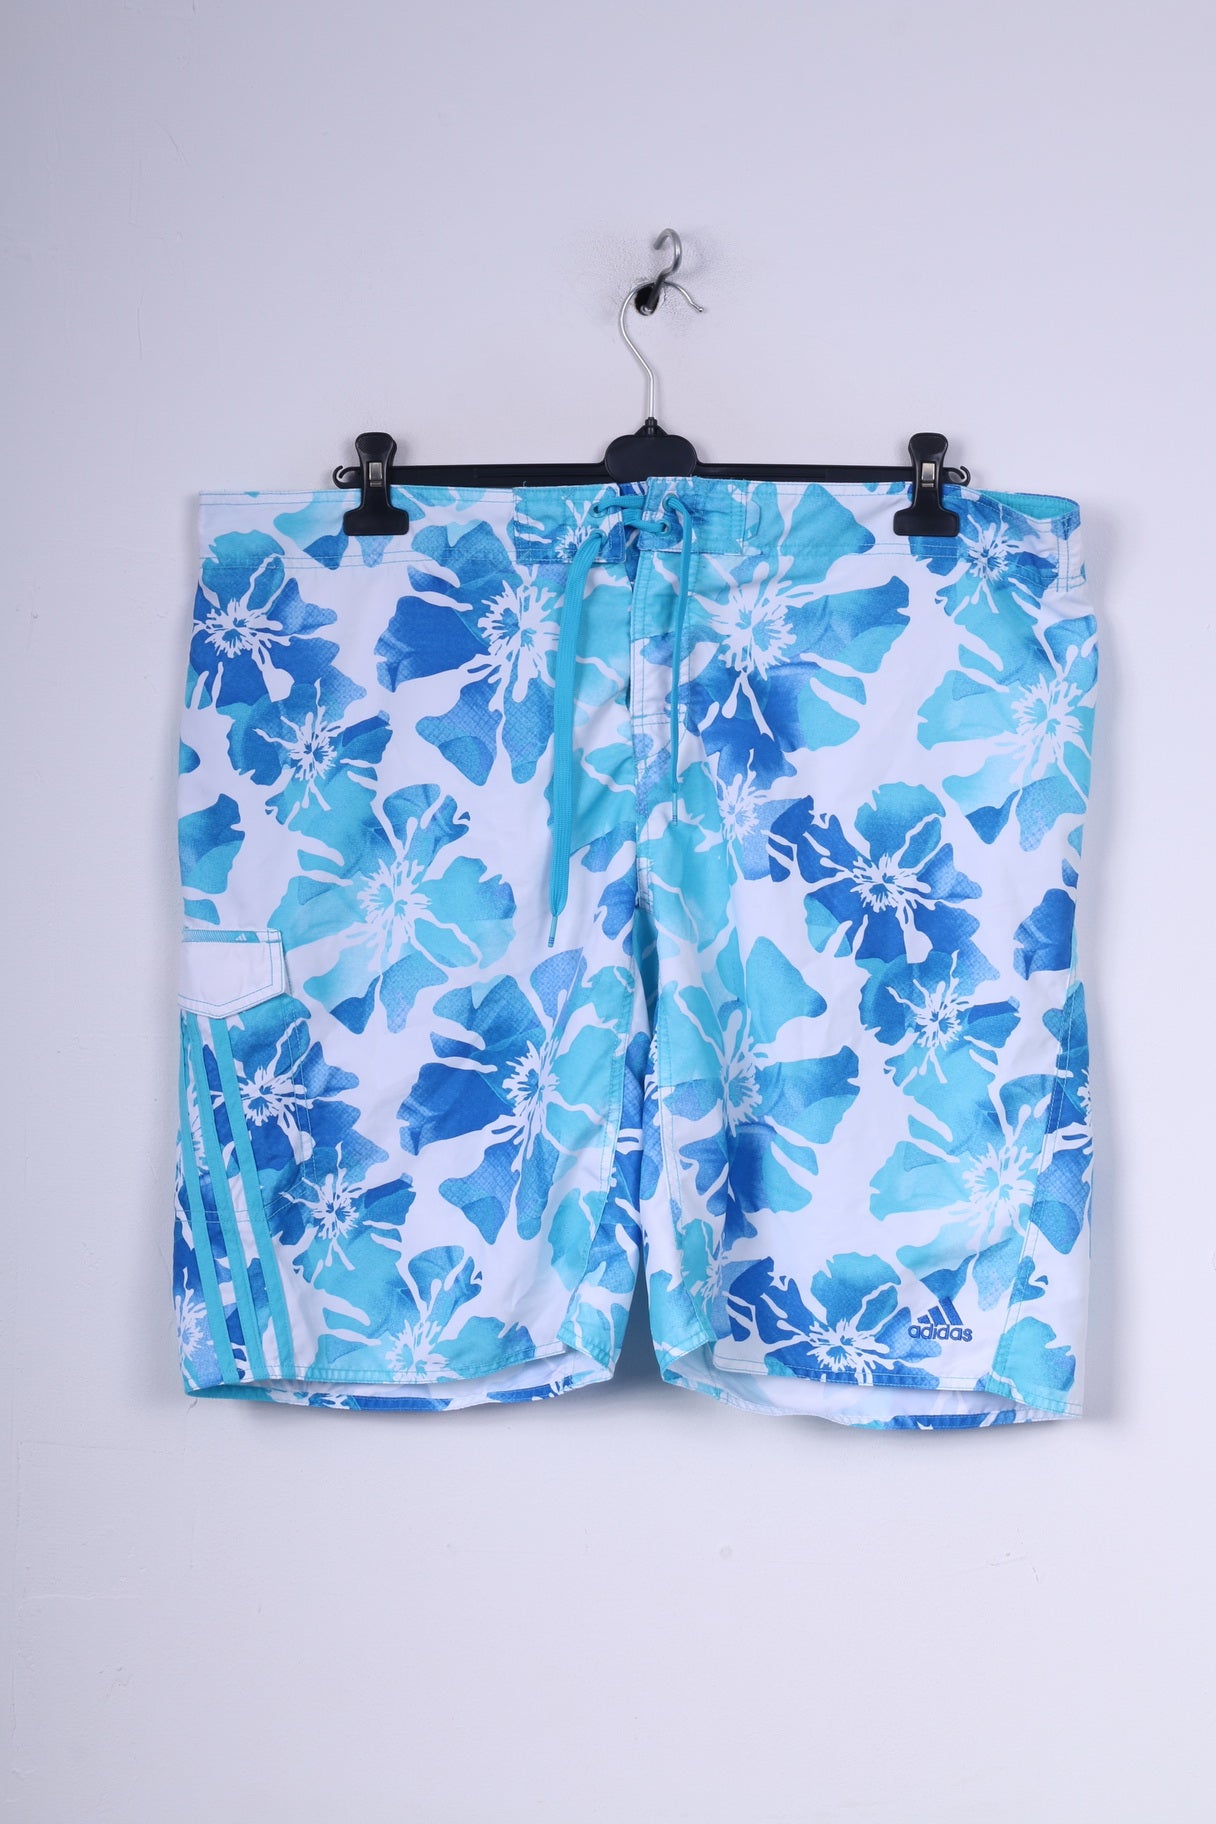 Adidas Mens XL Shorts Swimpants Blue Sportswear Flower Print Mesh Lined Beach